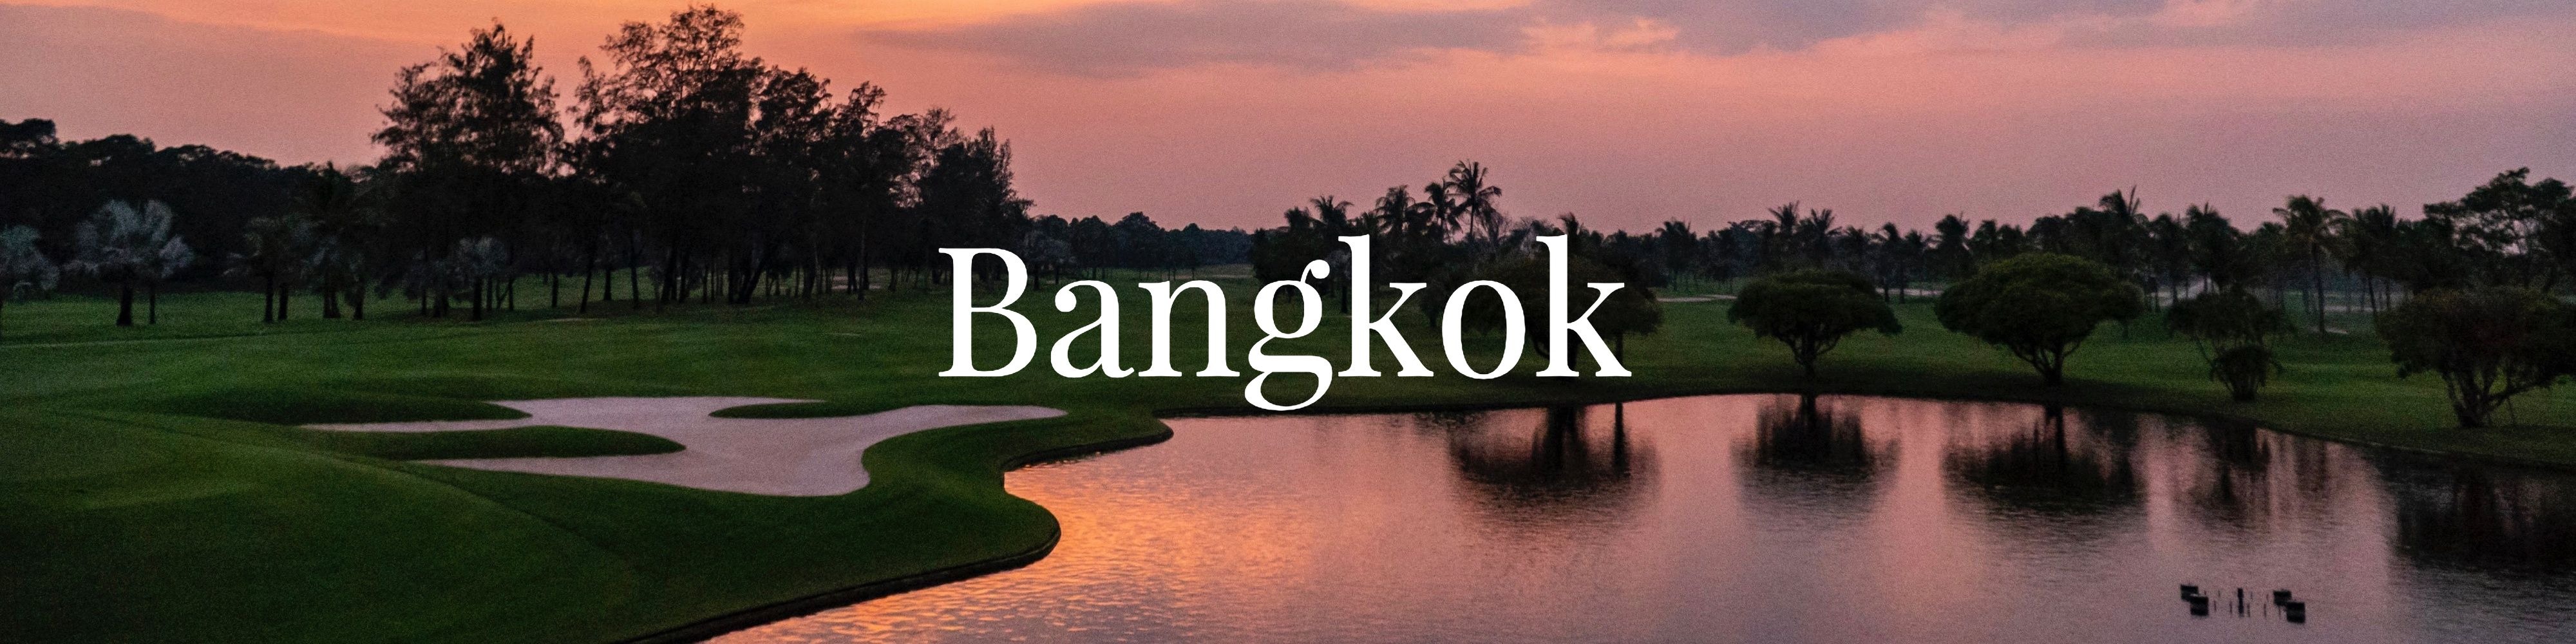 Destination_bangkok_headder – 1